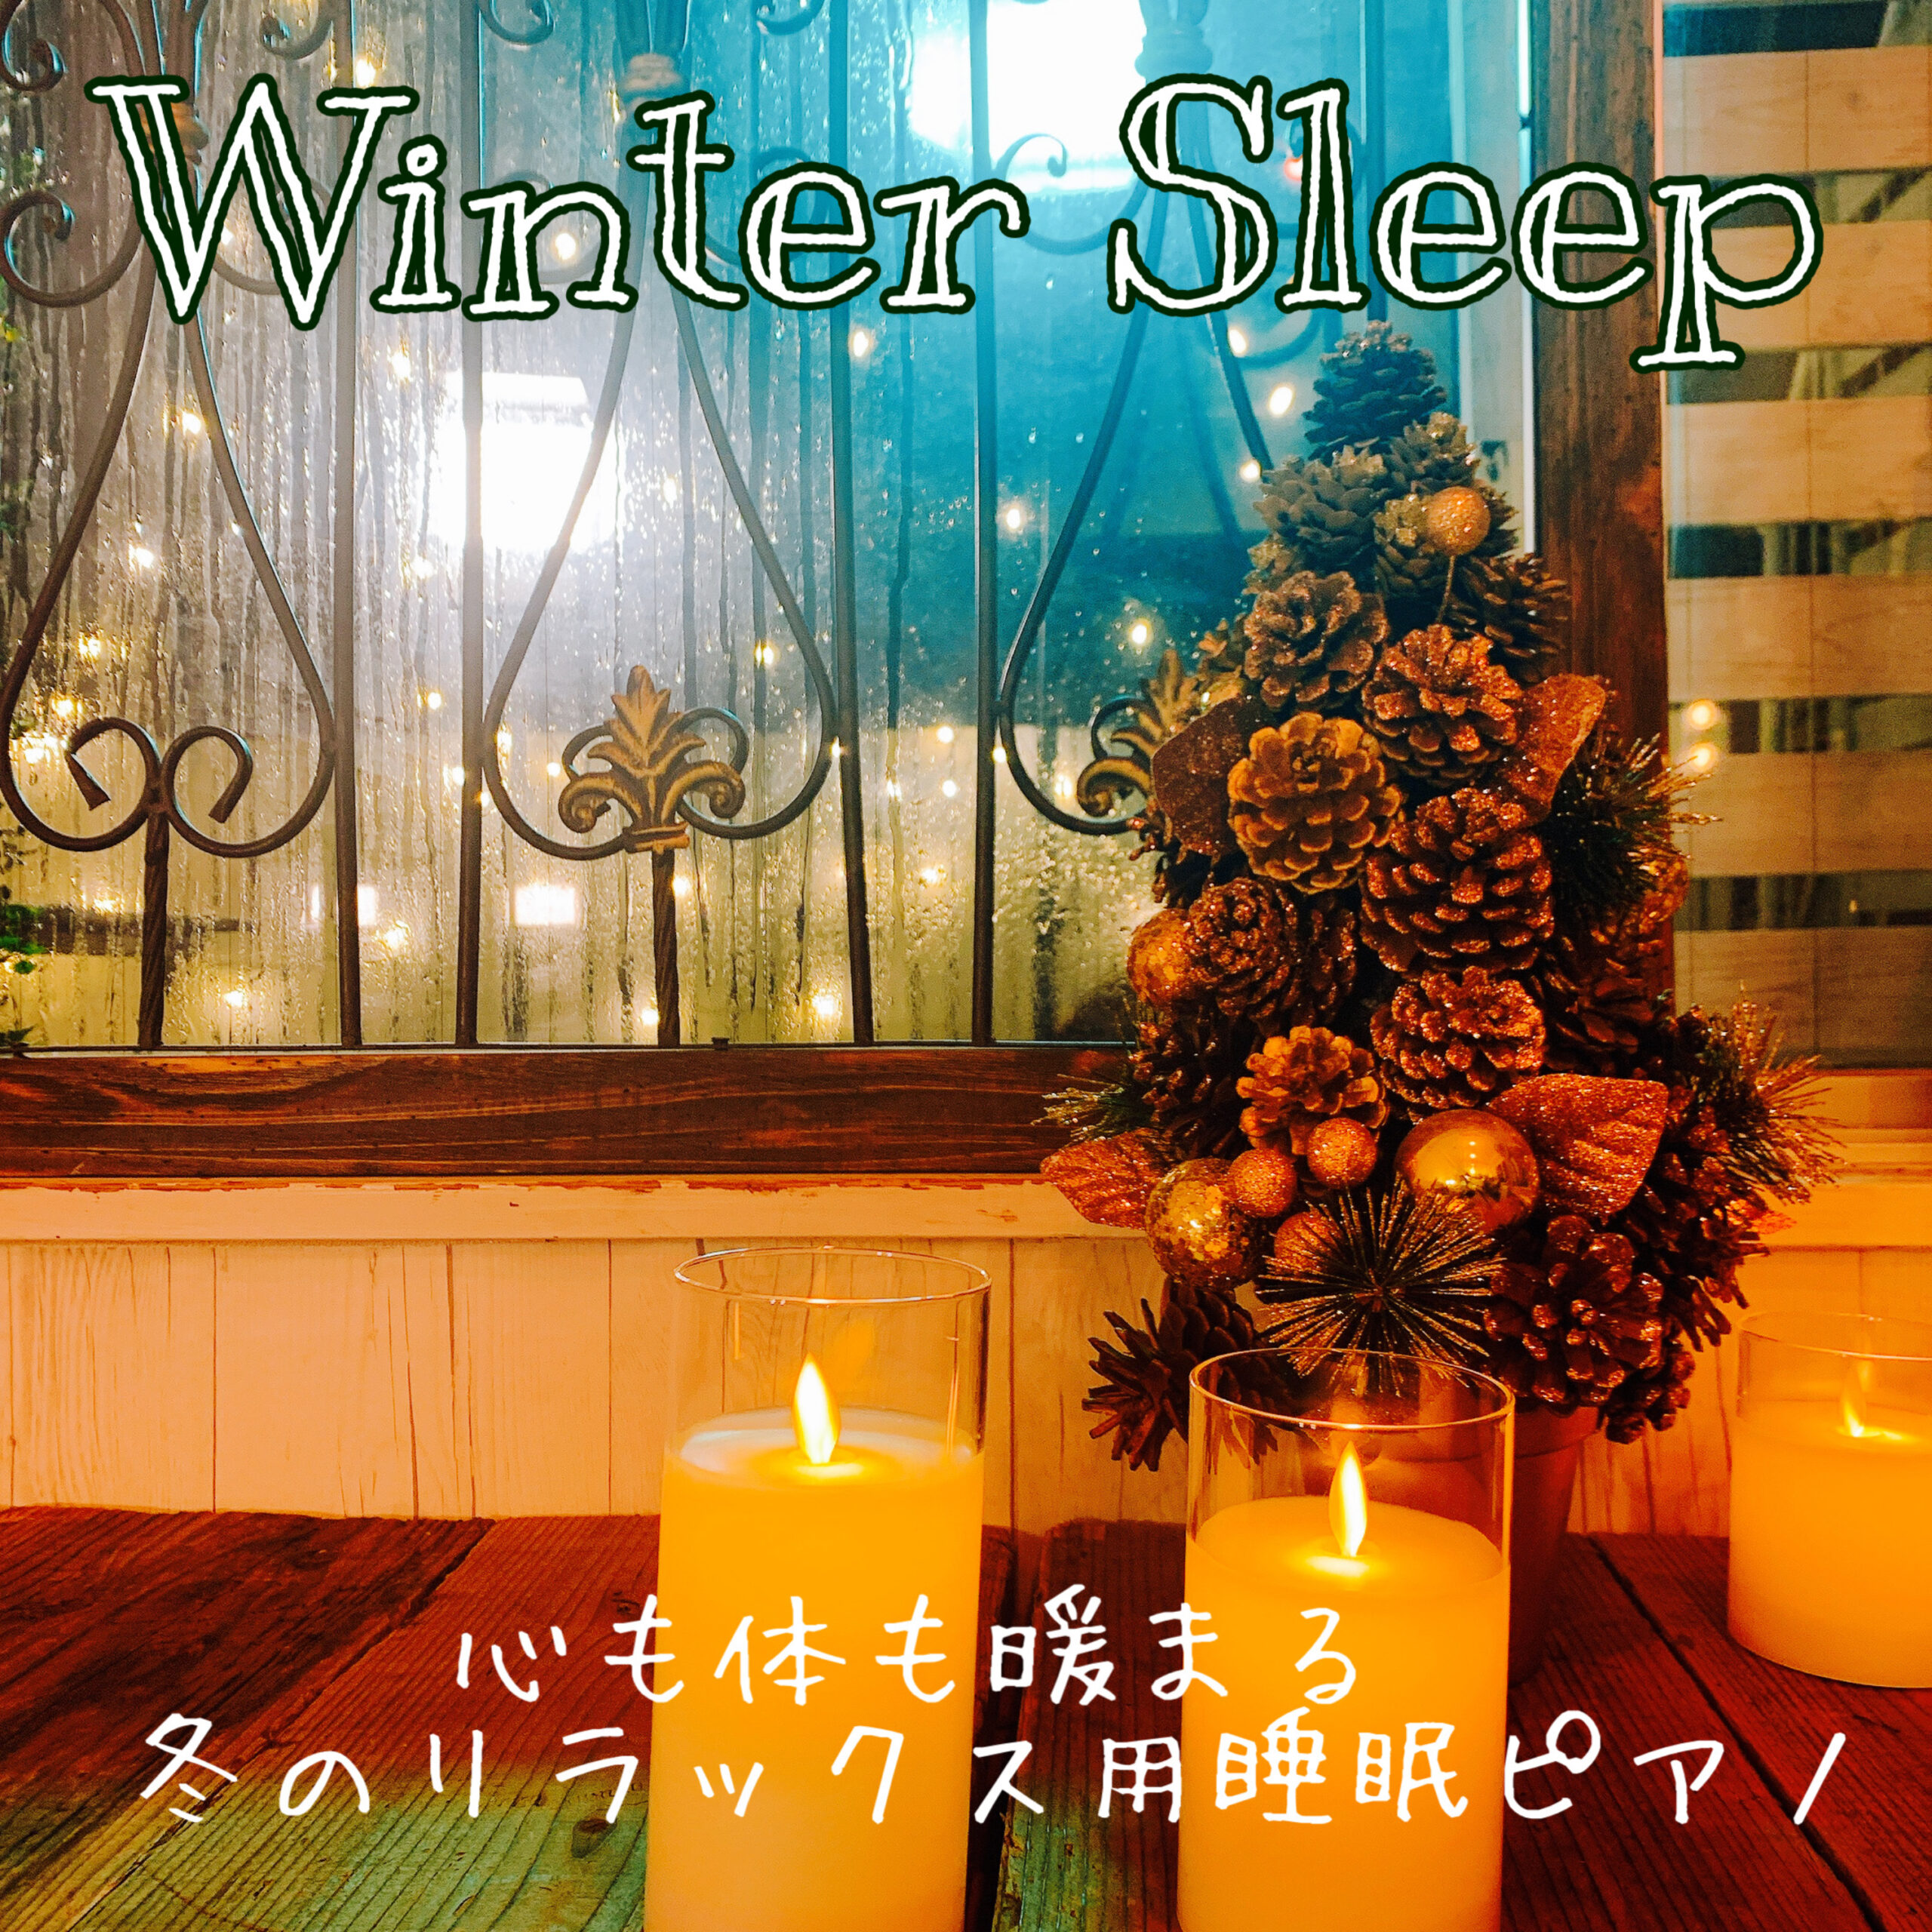 Wniter Sleep 心も体も暖まる冬のリラックス用睡眠ピアノ 夜の作業用、読書用、夜カフェ音楽 部屋がおしゃれな空間になるヒーリング音楽 睡眠用スパミュージック